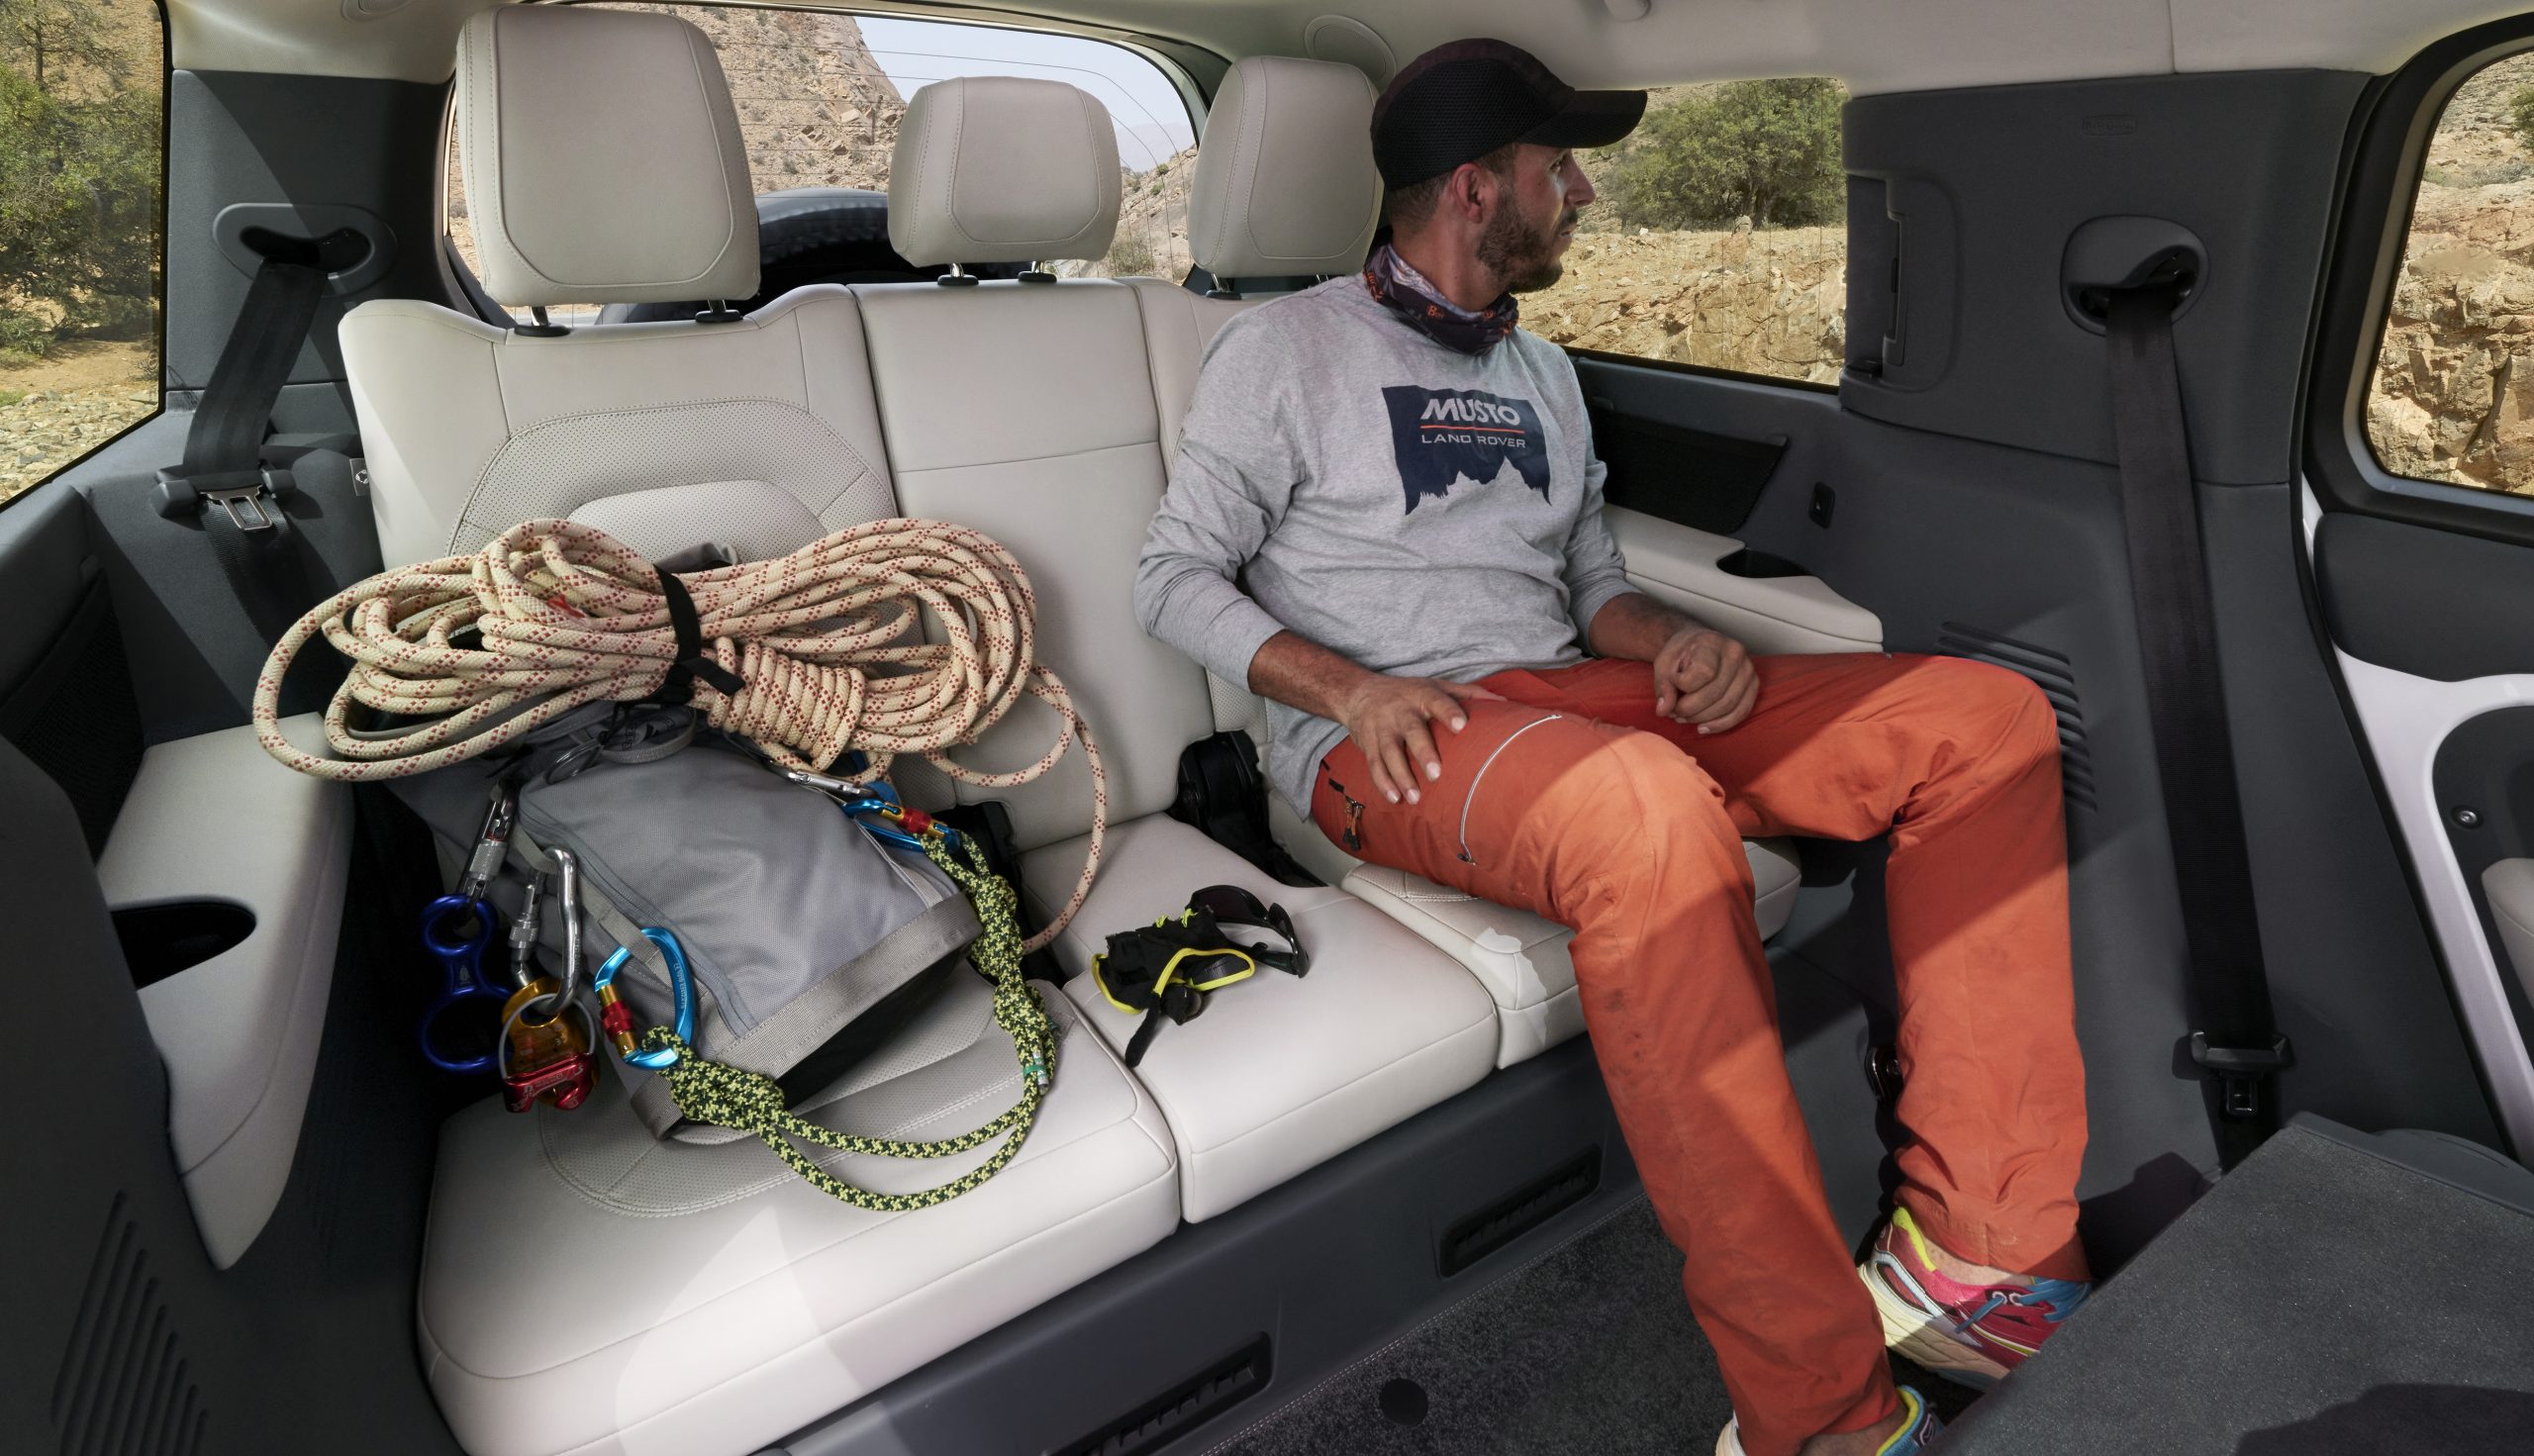 Land Rover Defender 130 interior seating